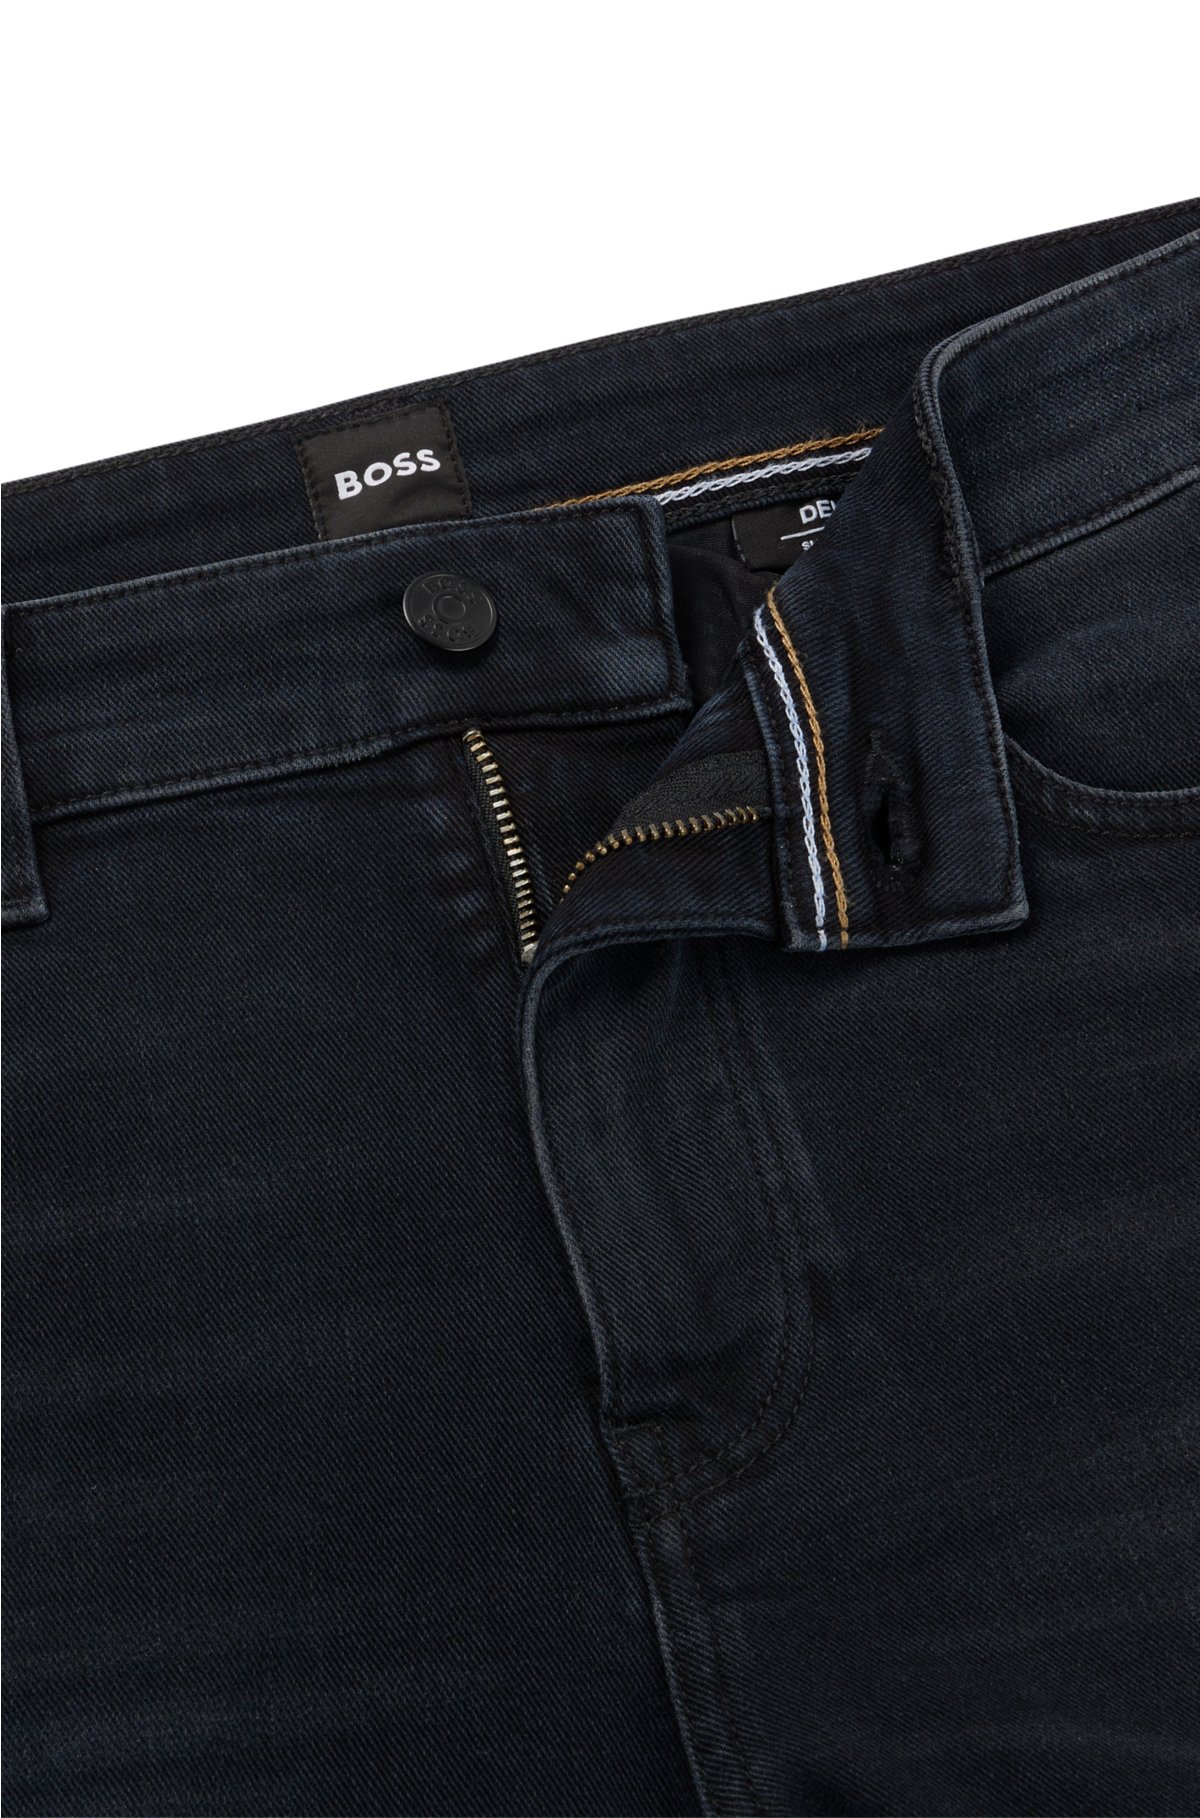 BOSS - Slim-fit jeans in super-soft navy Italian denim